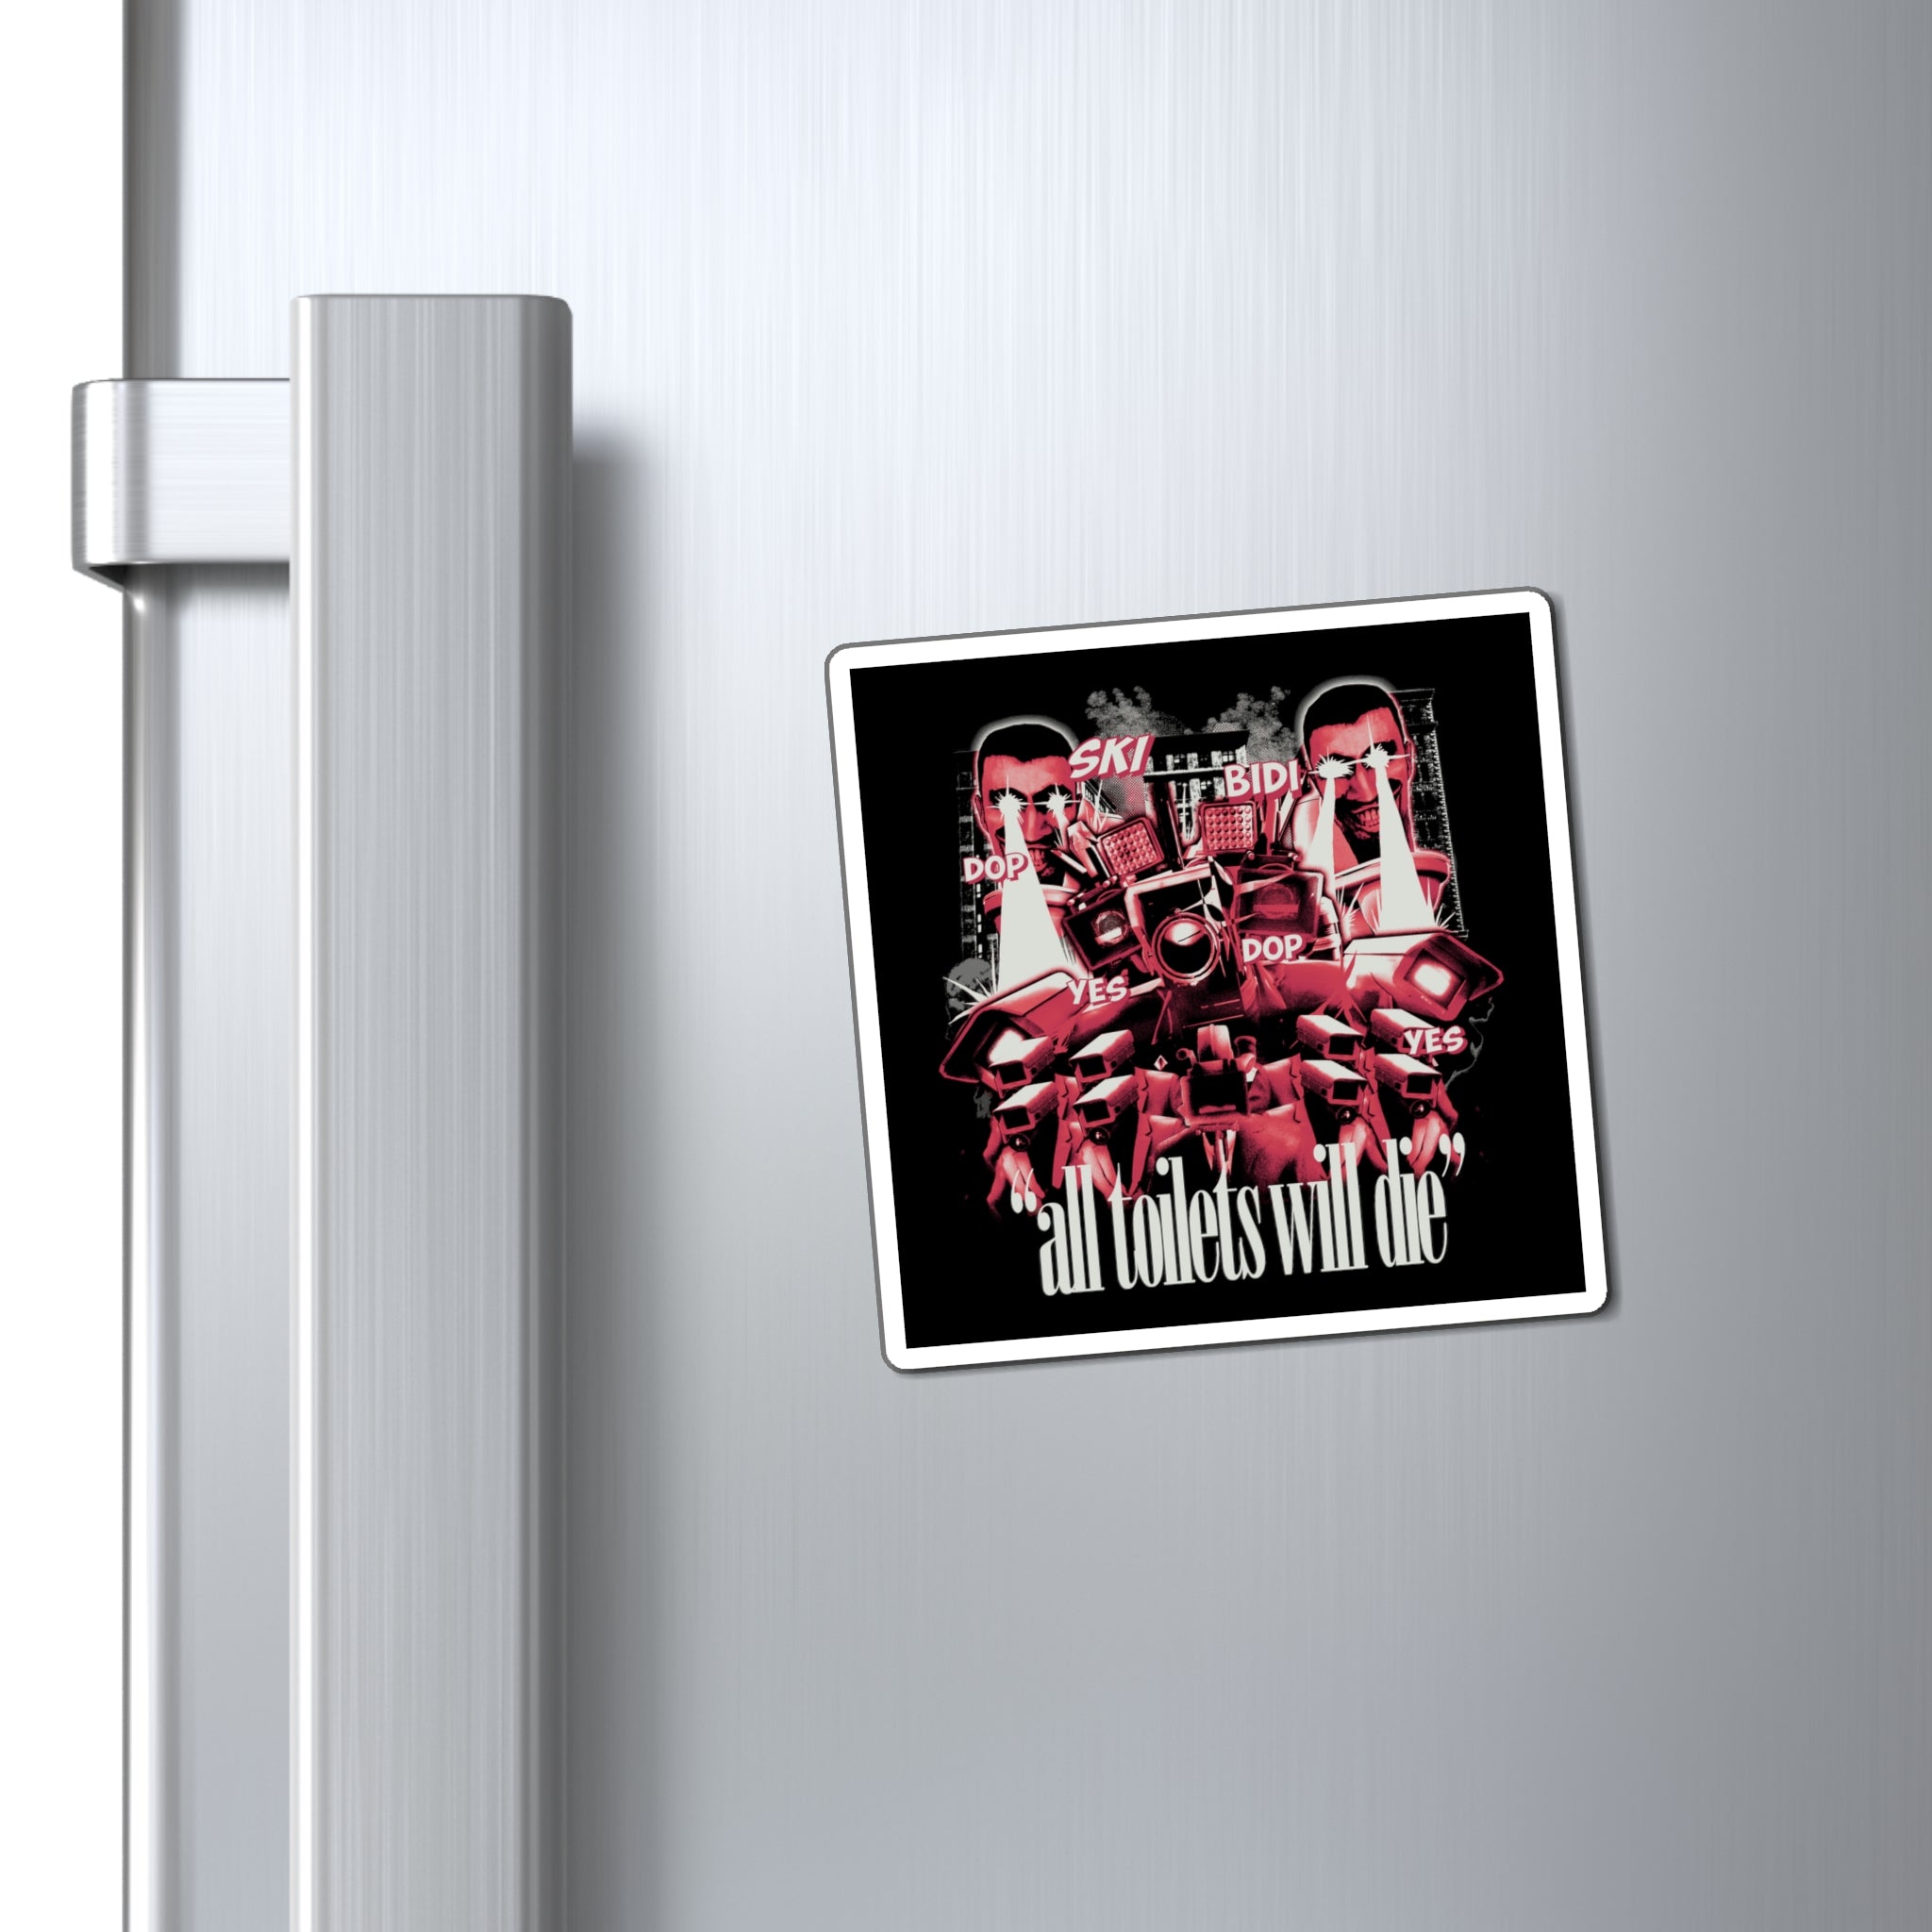 Skibidi toilets and cameraman collage magnet, black background, stuck on silver fridge